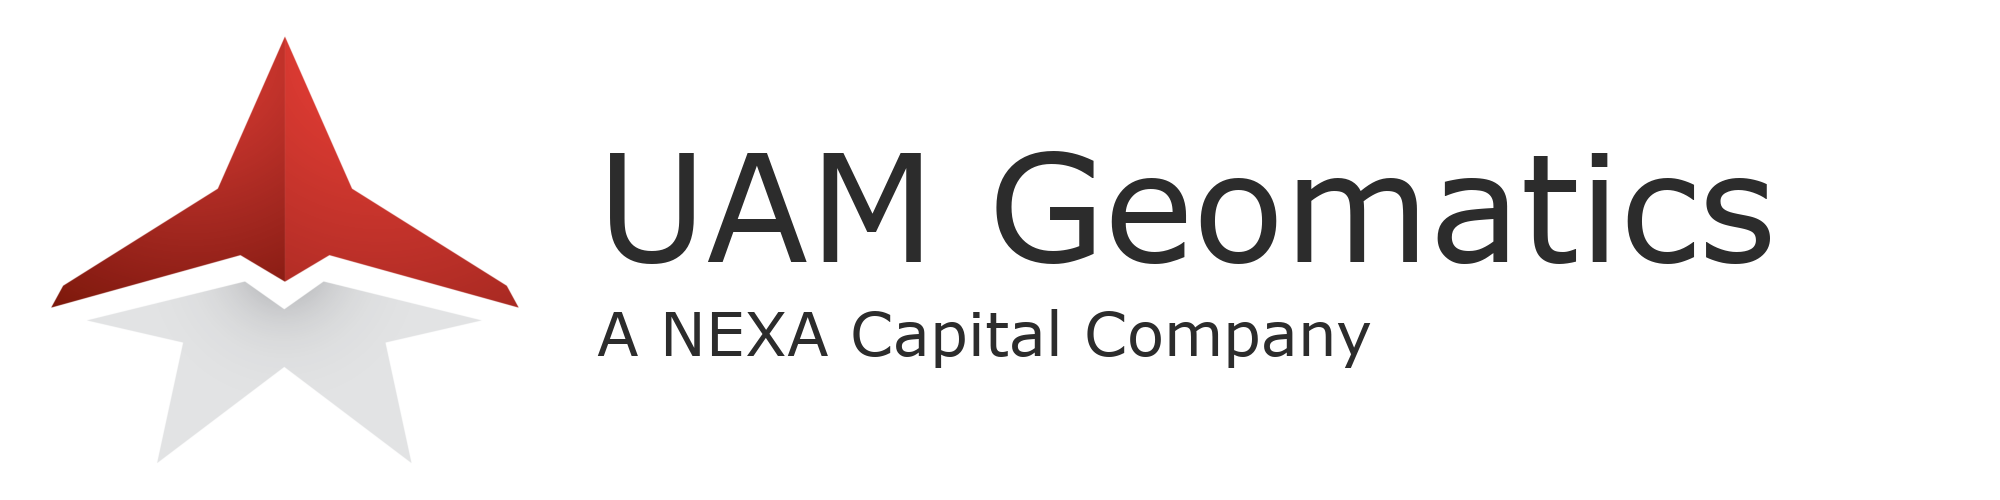 UAM Geomatics, Inc. logo